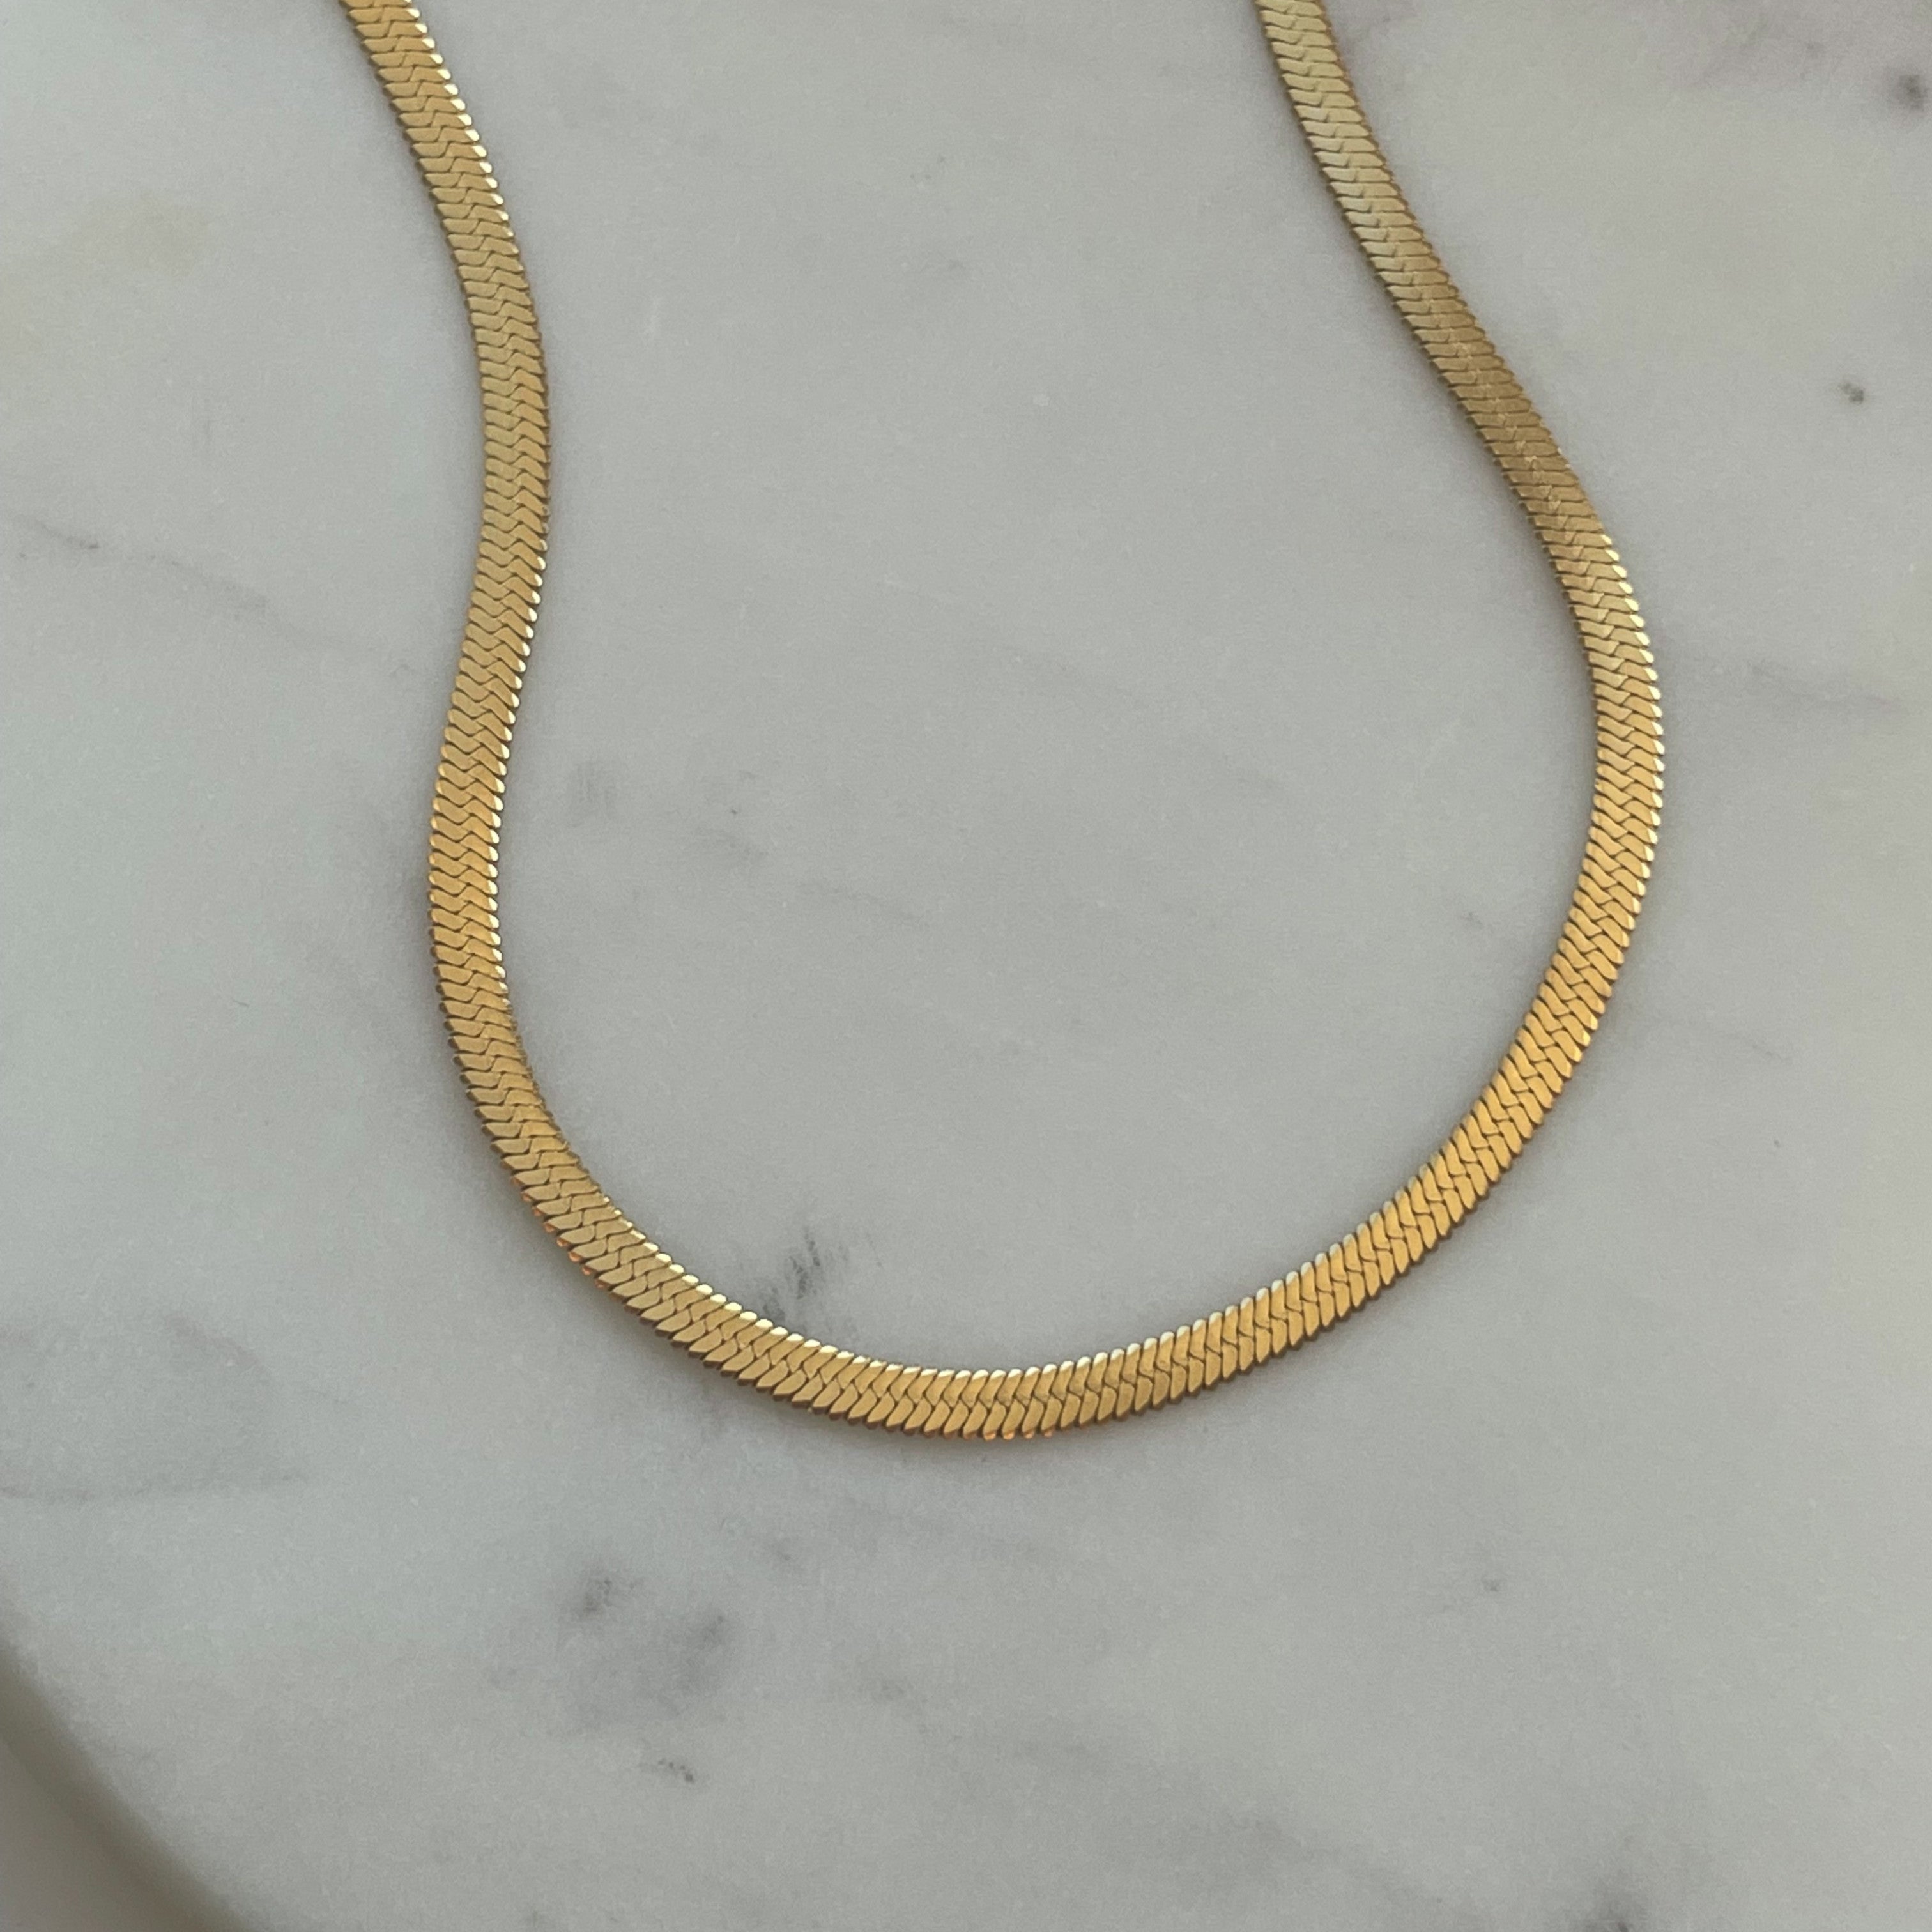 Classic gold herringbone chain accessory